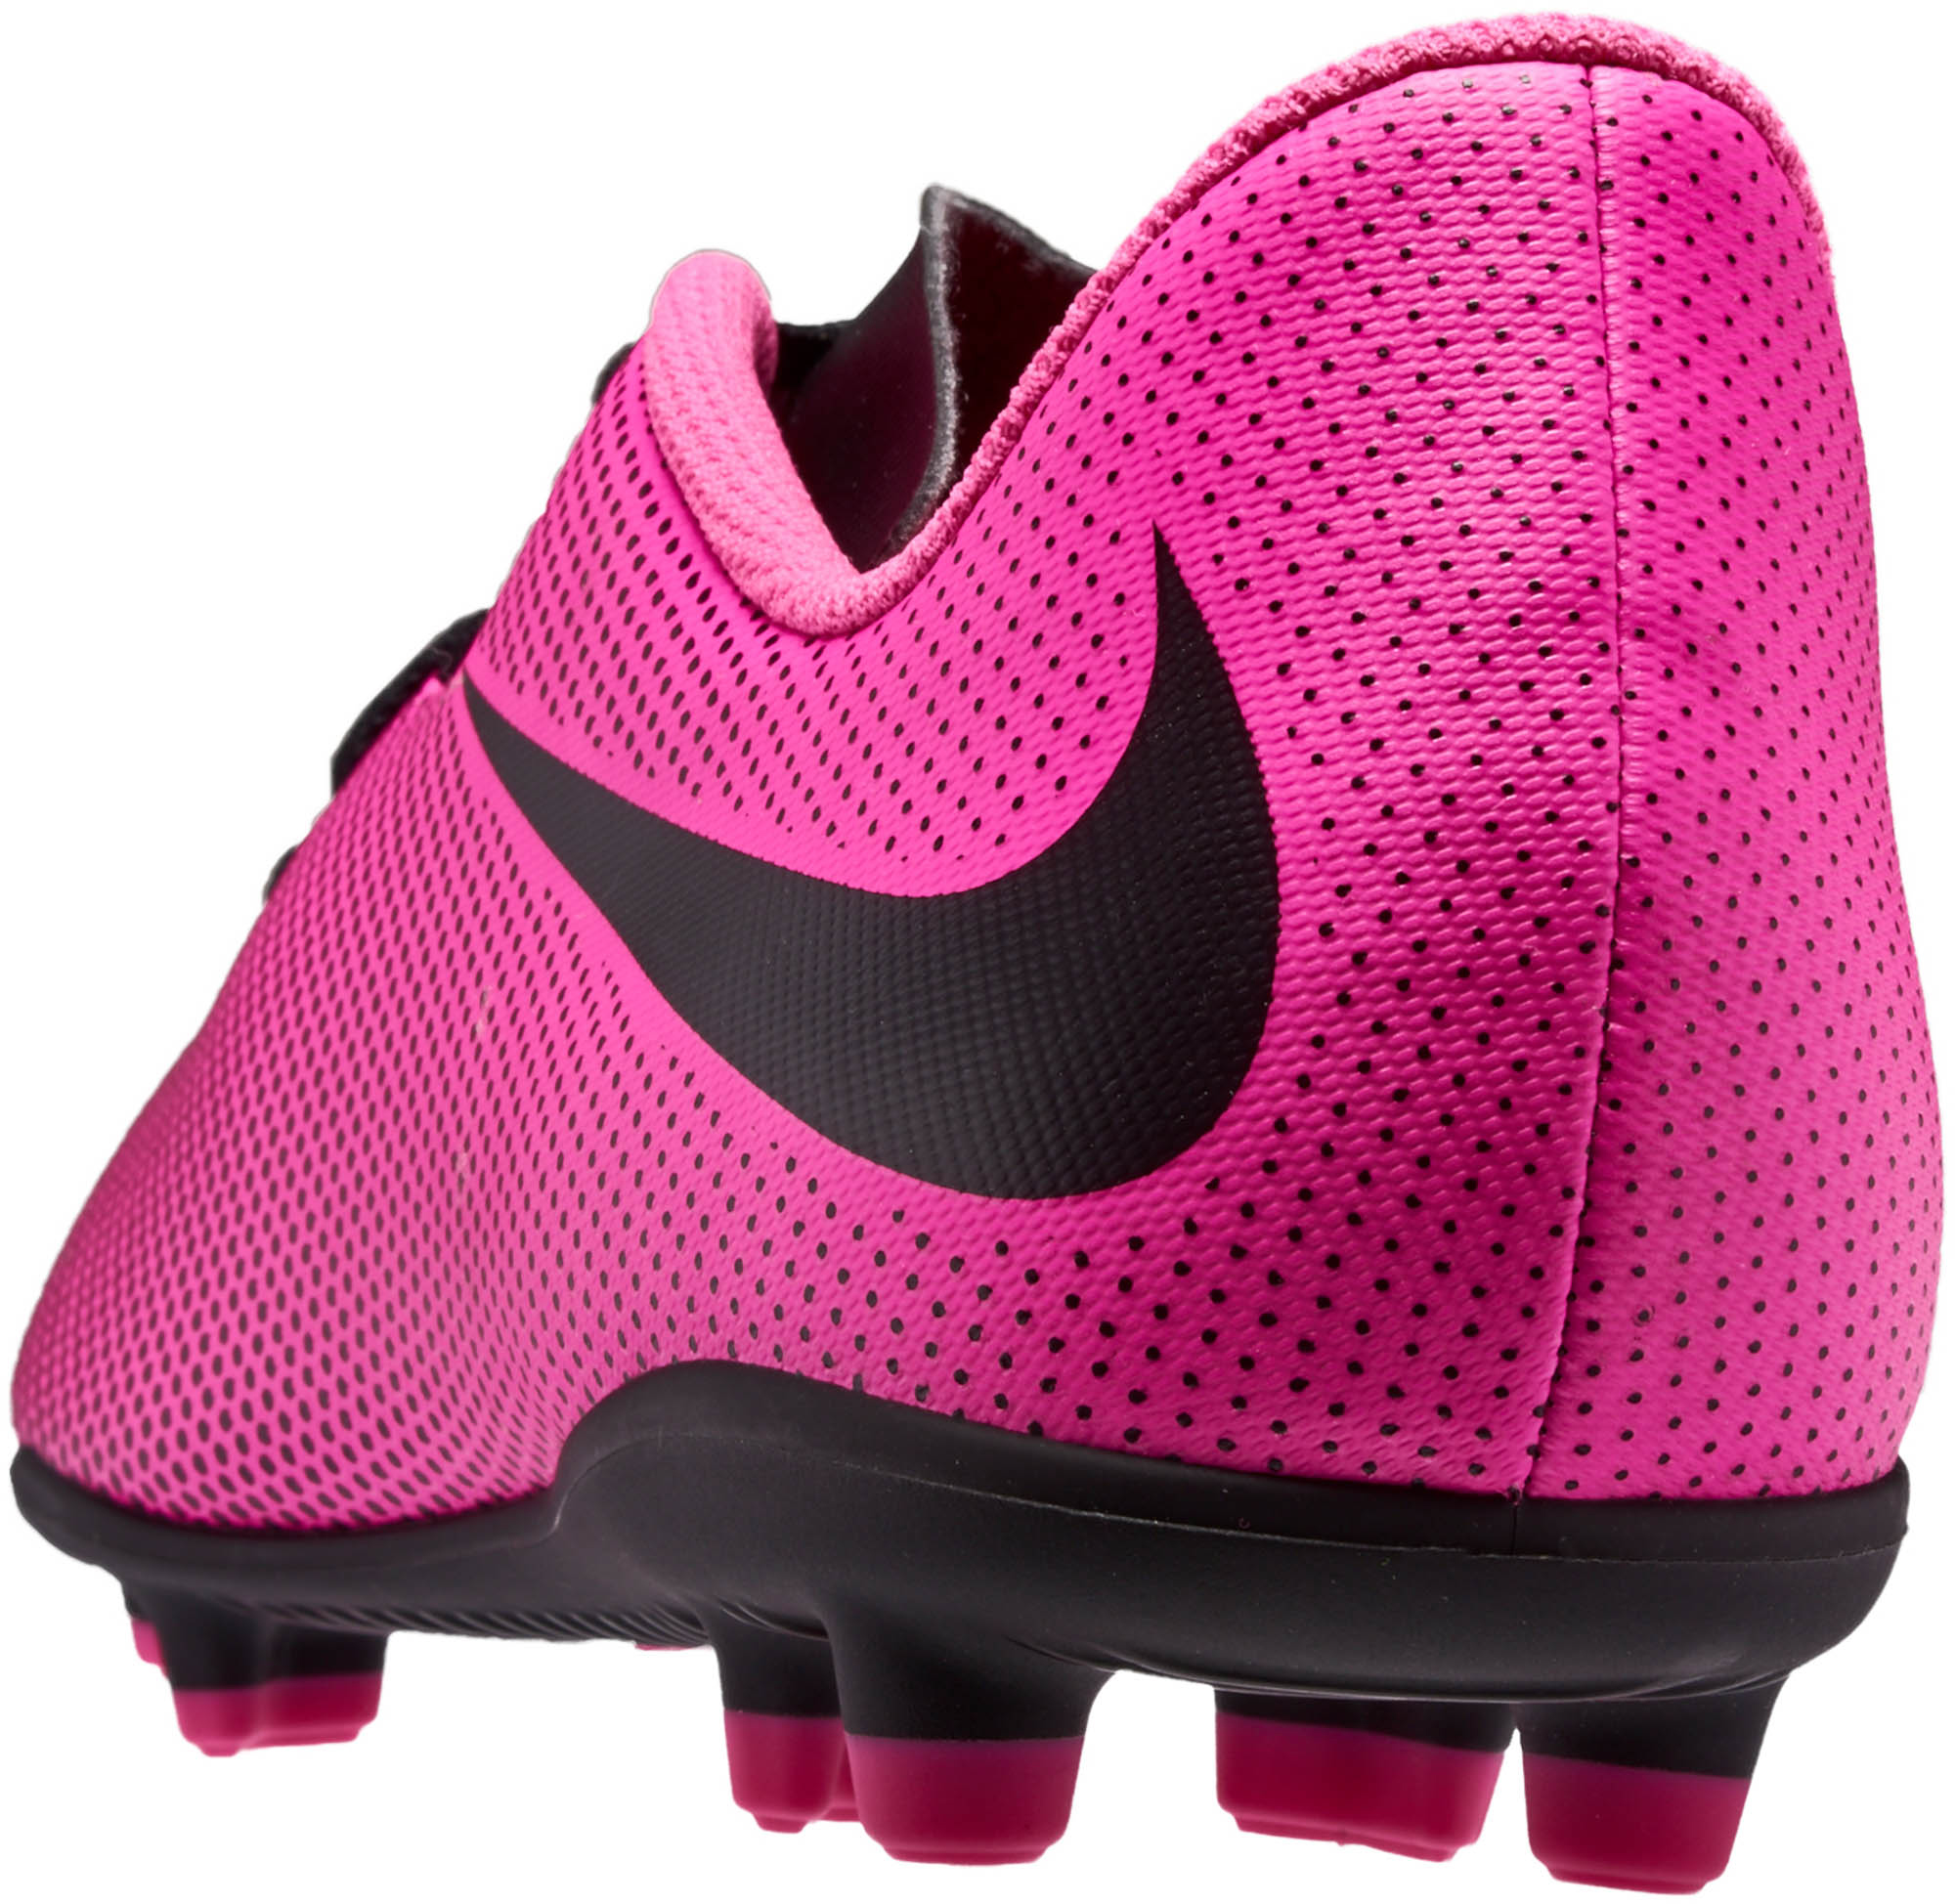 Nike Kids Bravata II FG Soccer Cleats - Pink Blast & Black - Soccer Master